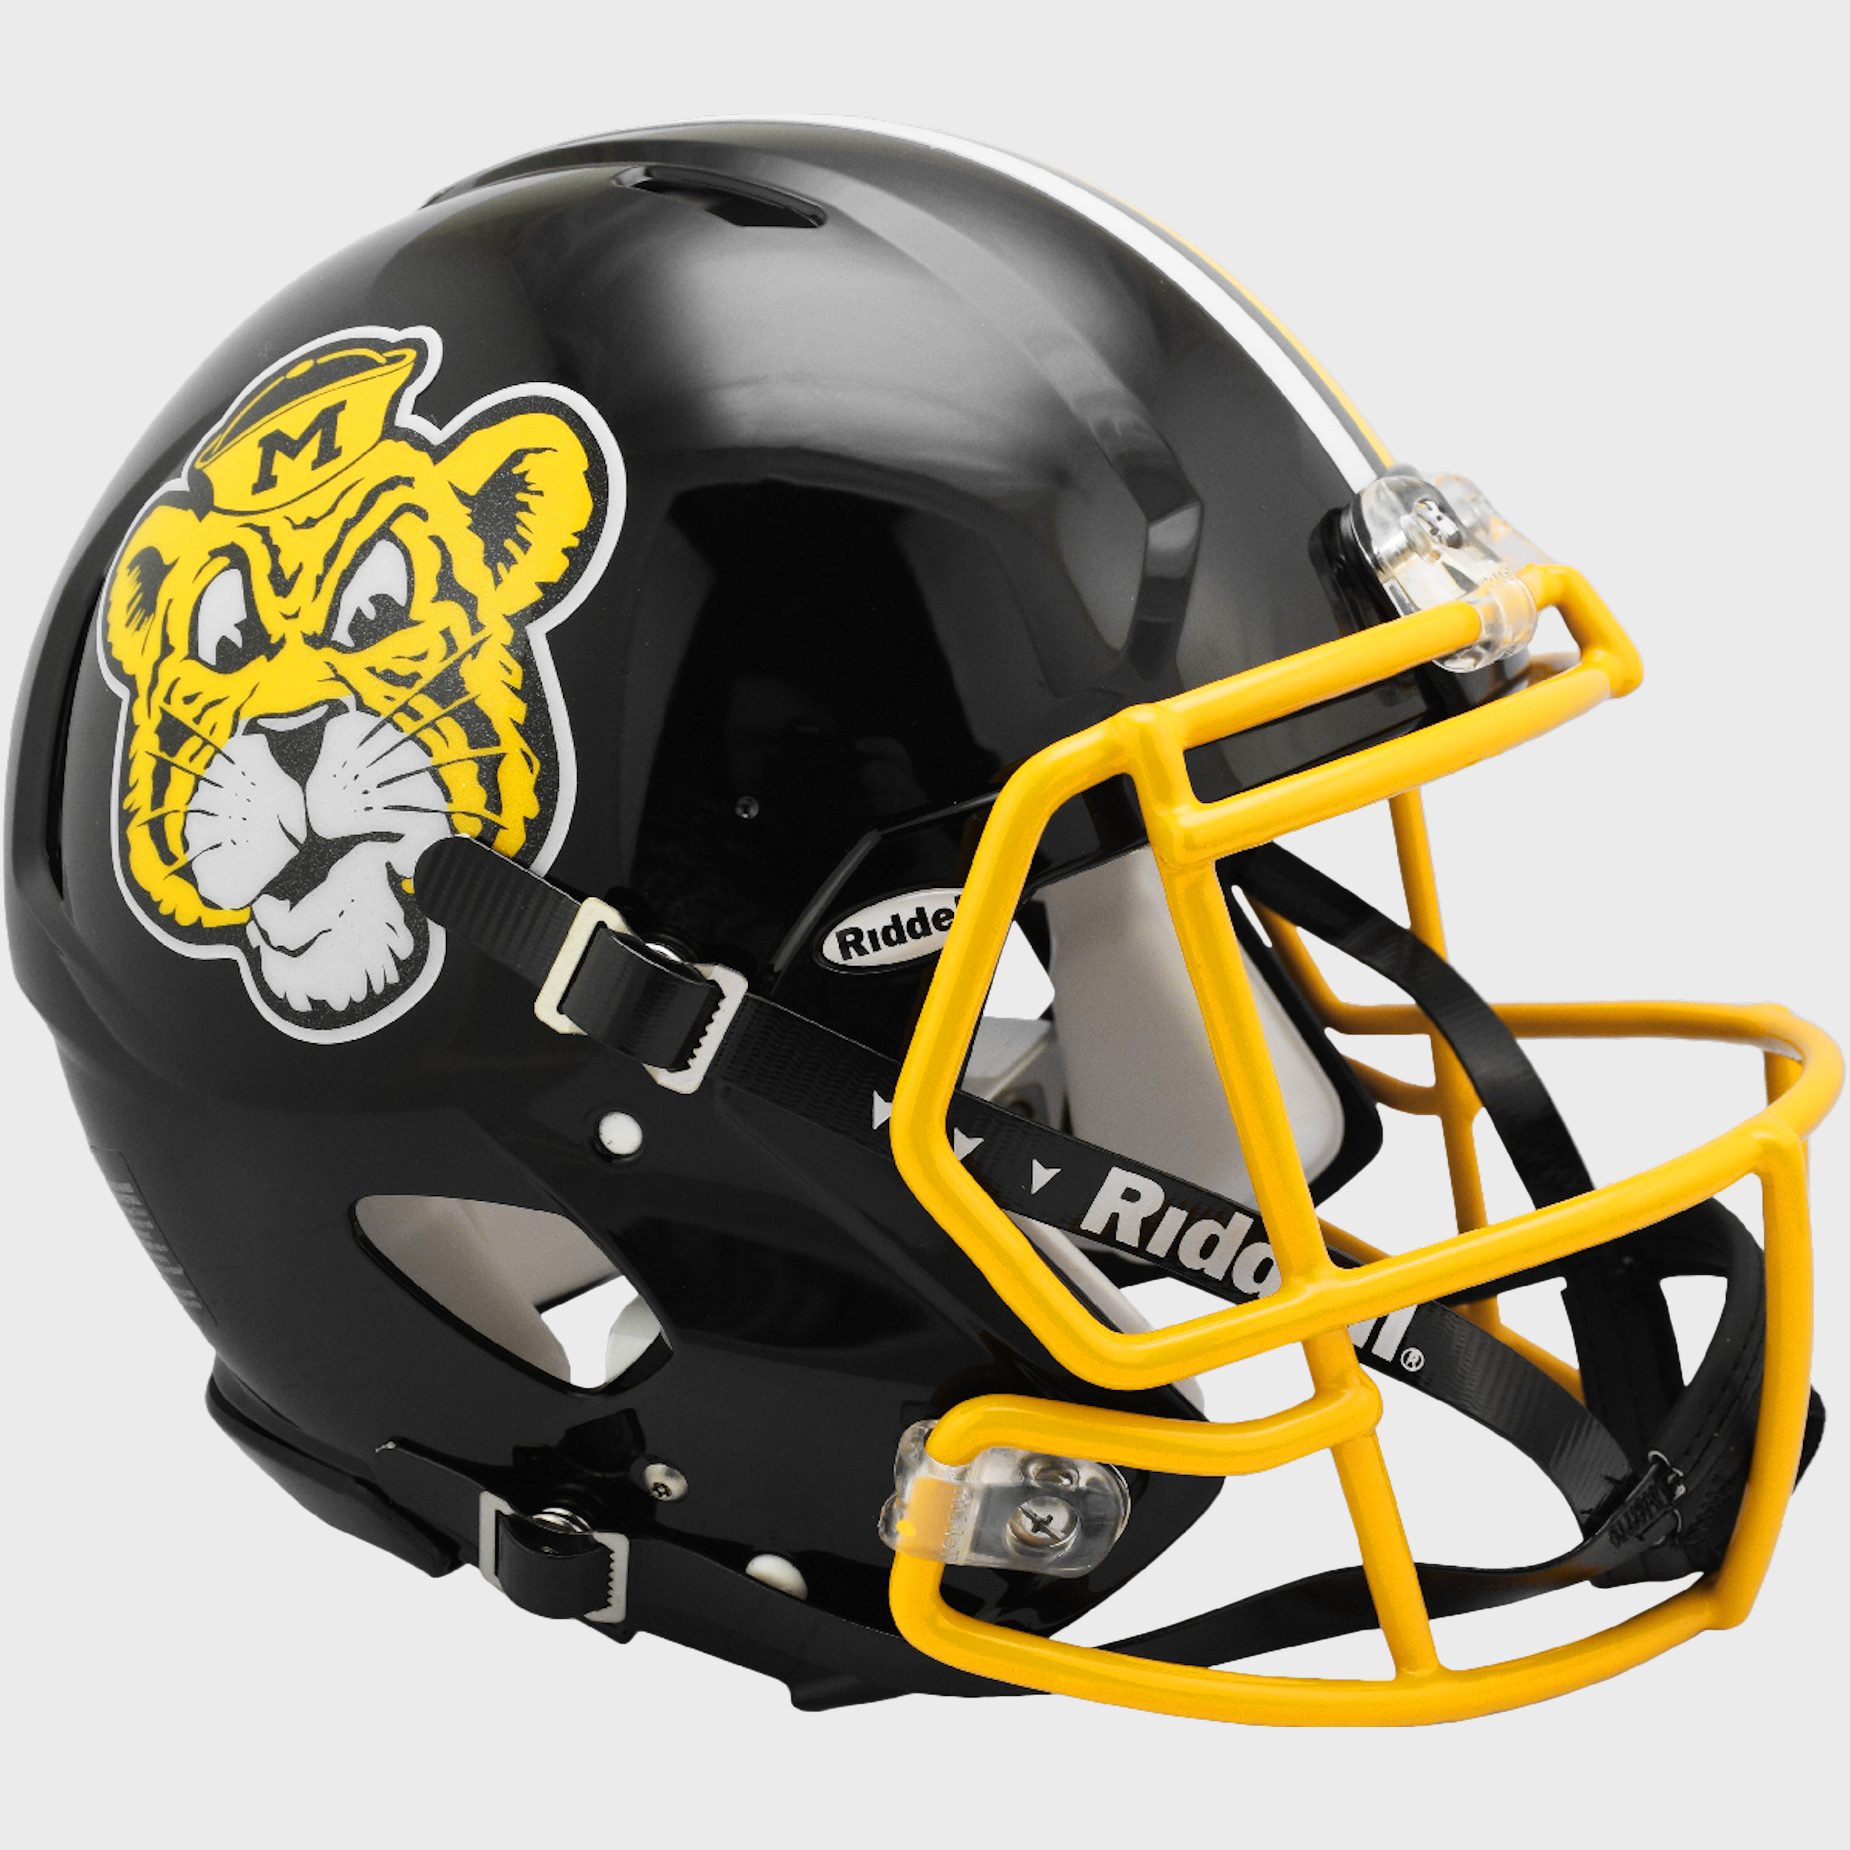 Missouri Tigers authentic full size helmet